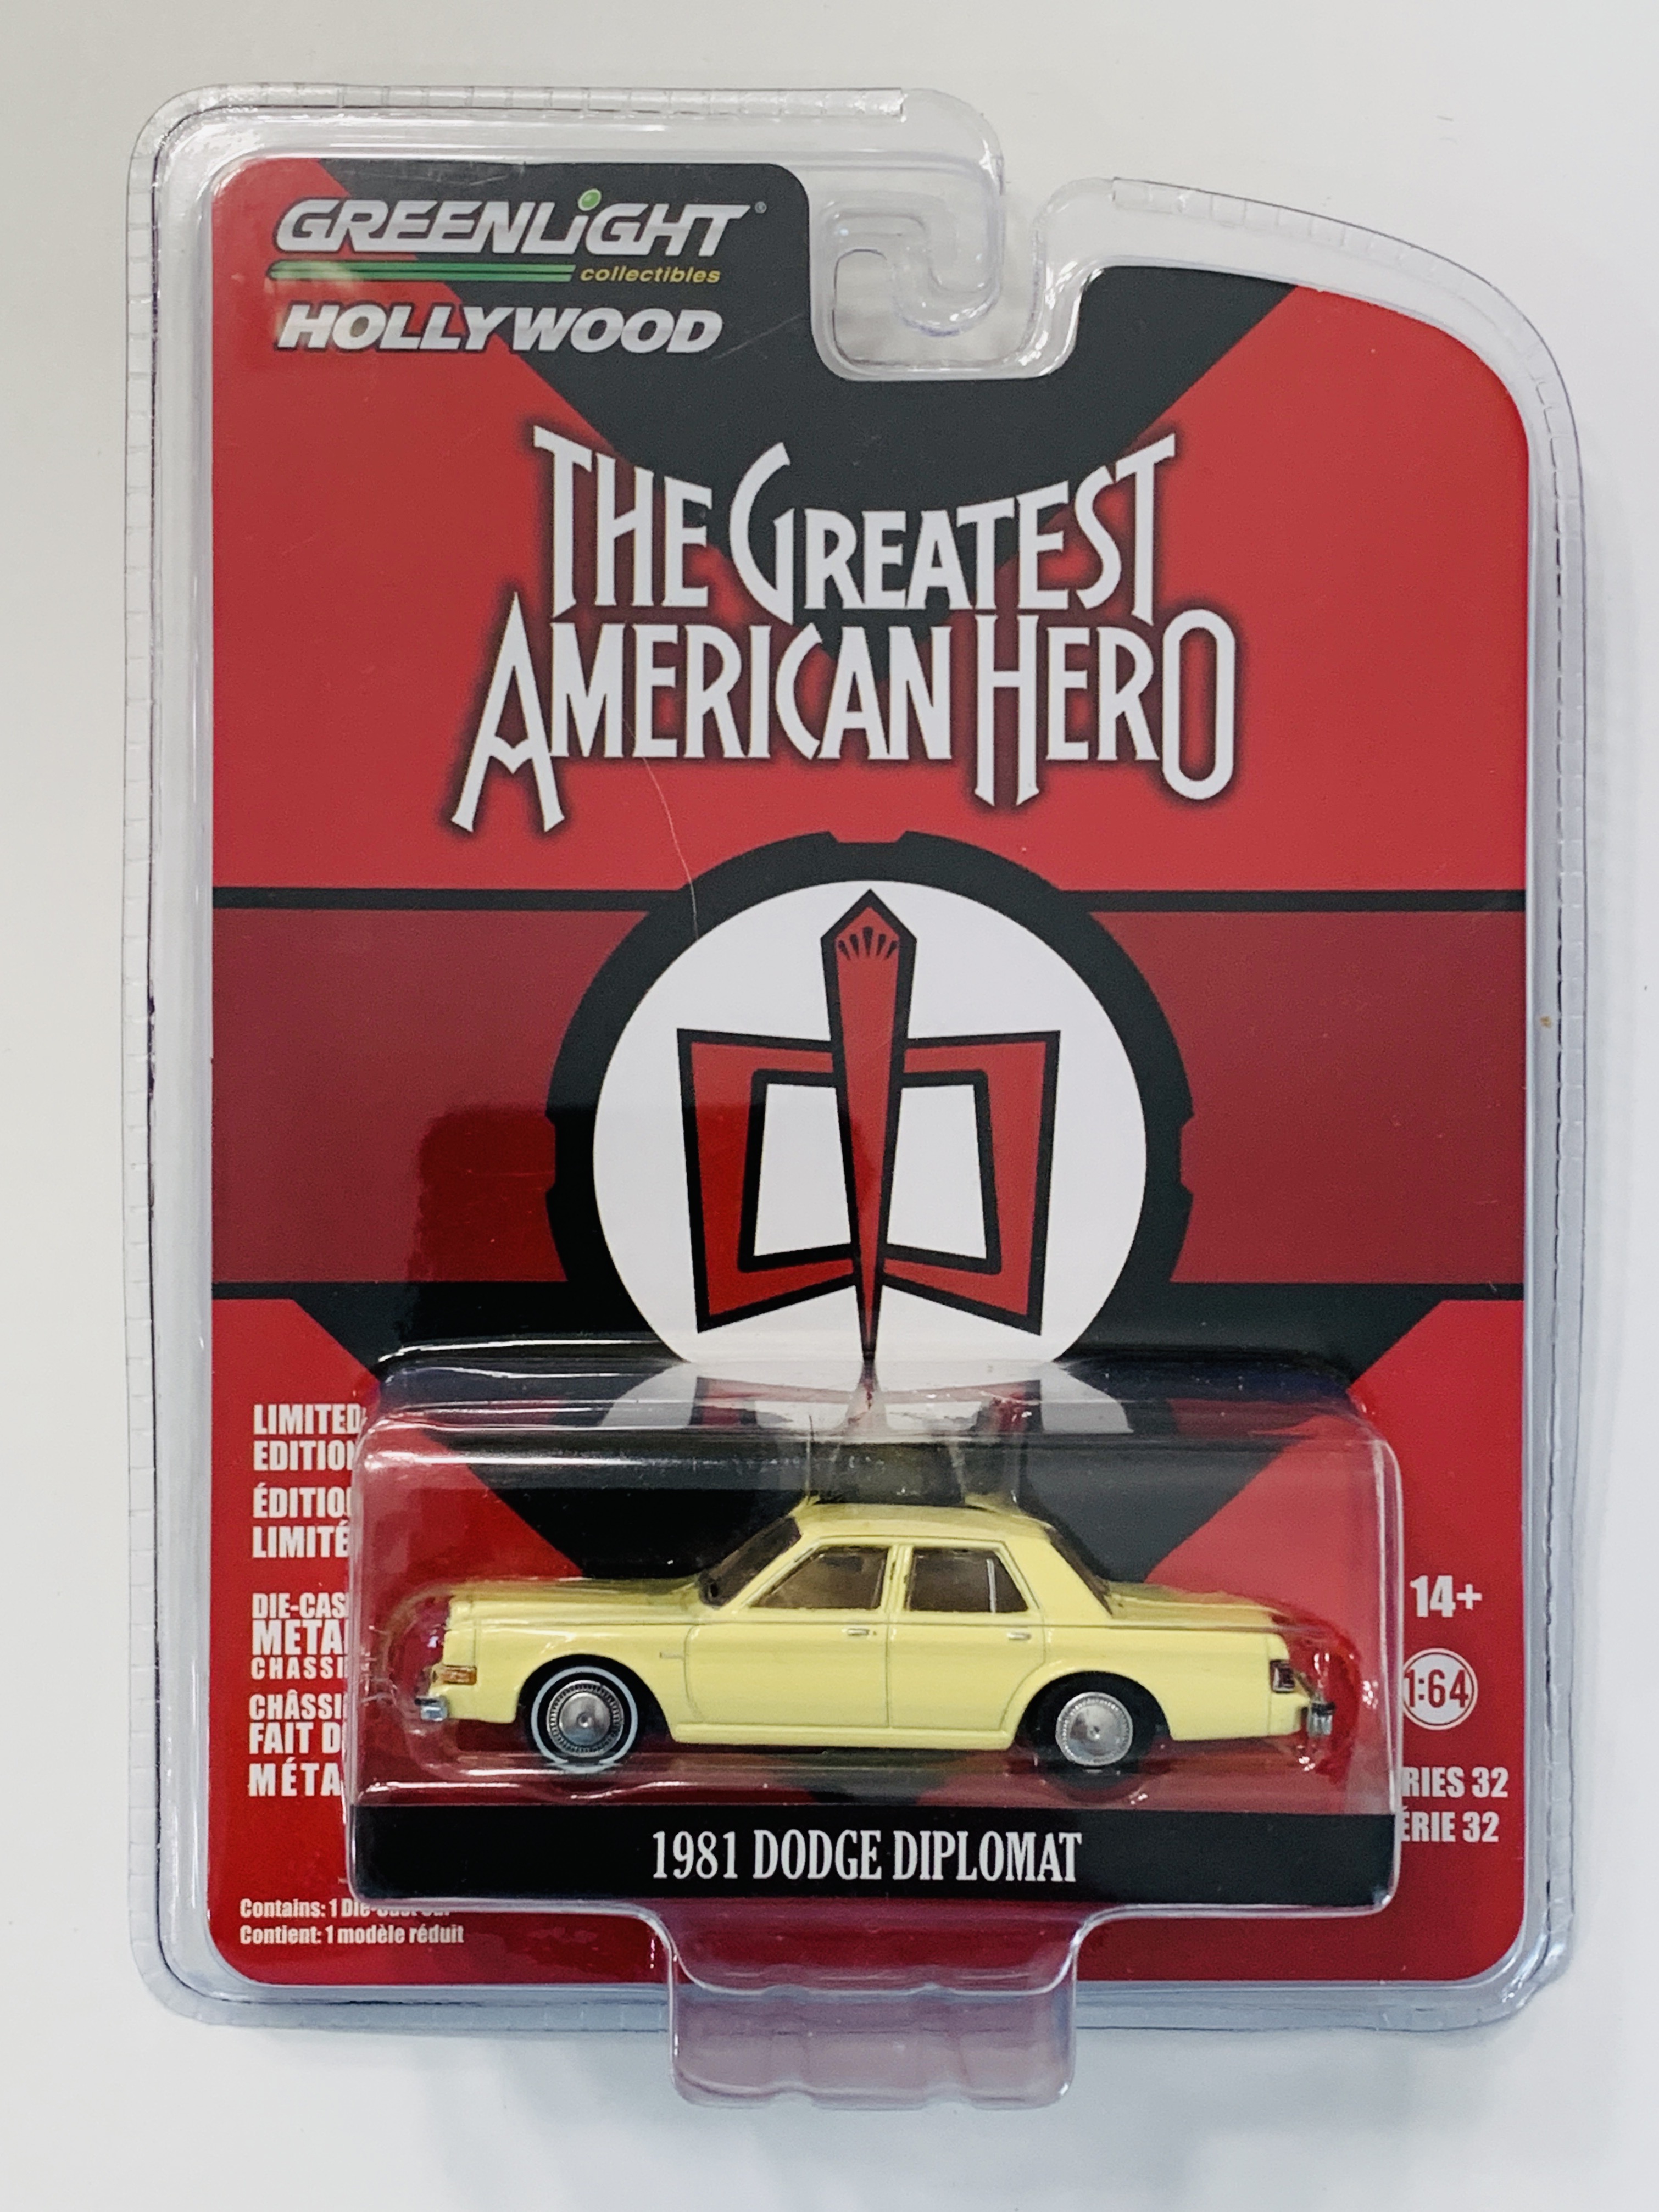 Greenlight Hollywood The Greatest American Hero 1981 Dodge Diplomat